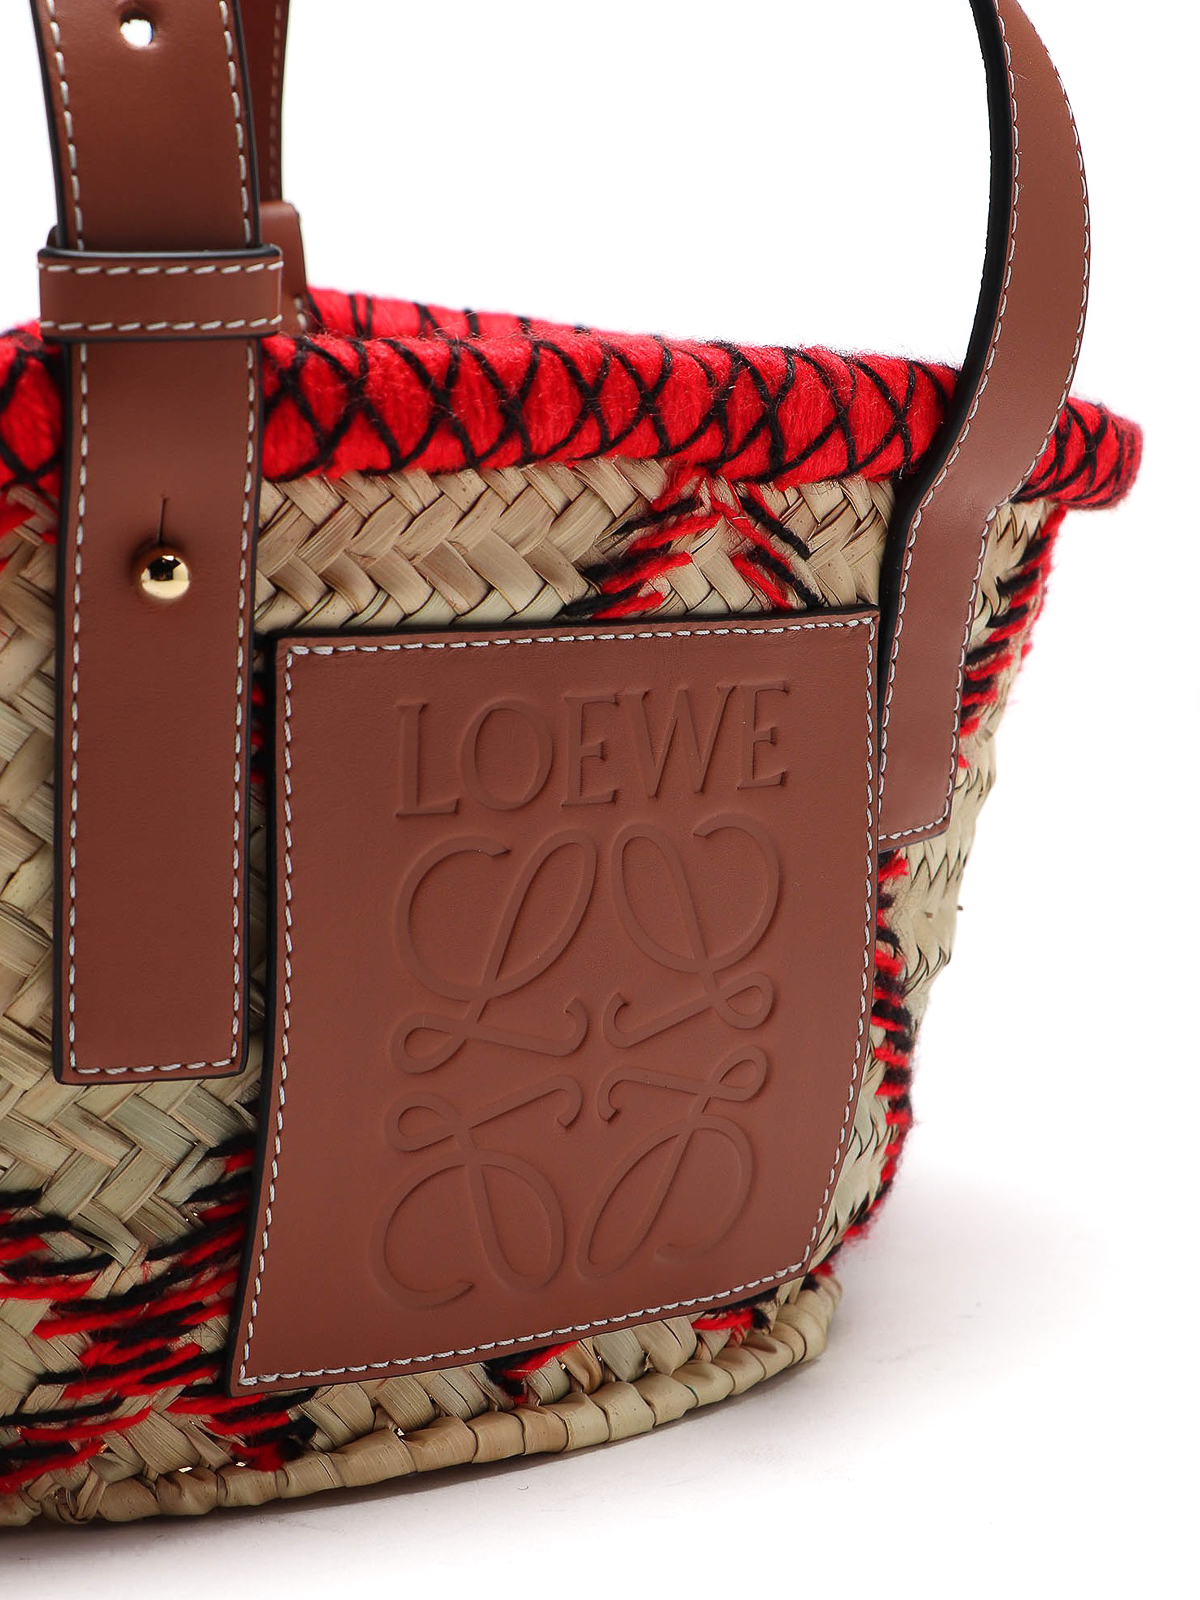 Totes bags Loewe - Basket Animals small straw tote bag - 30350S937100